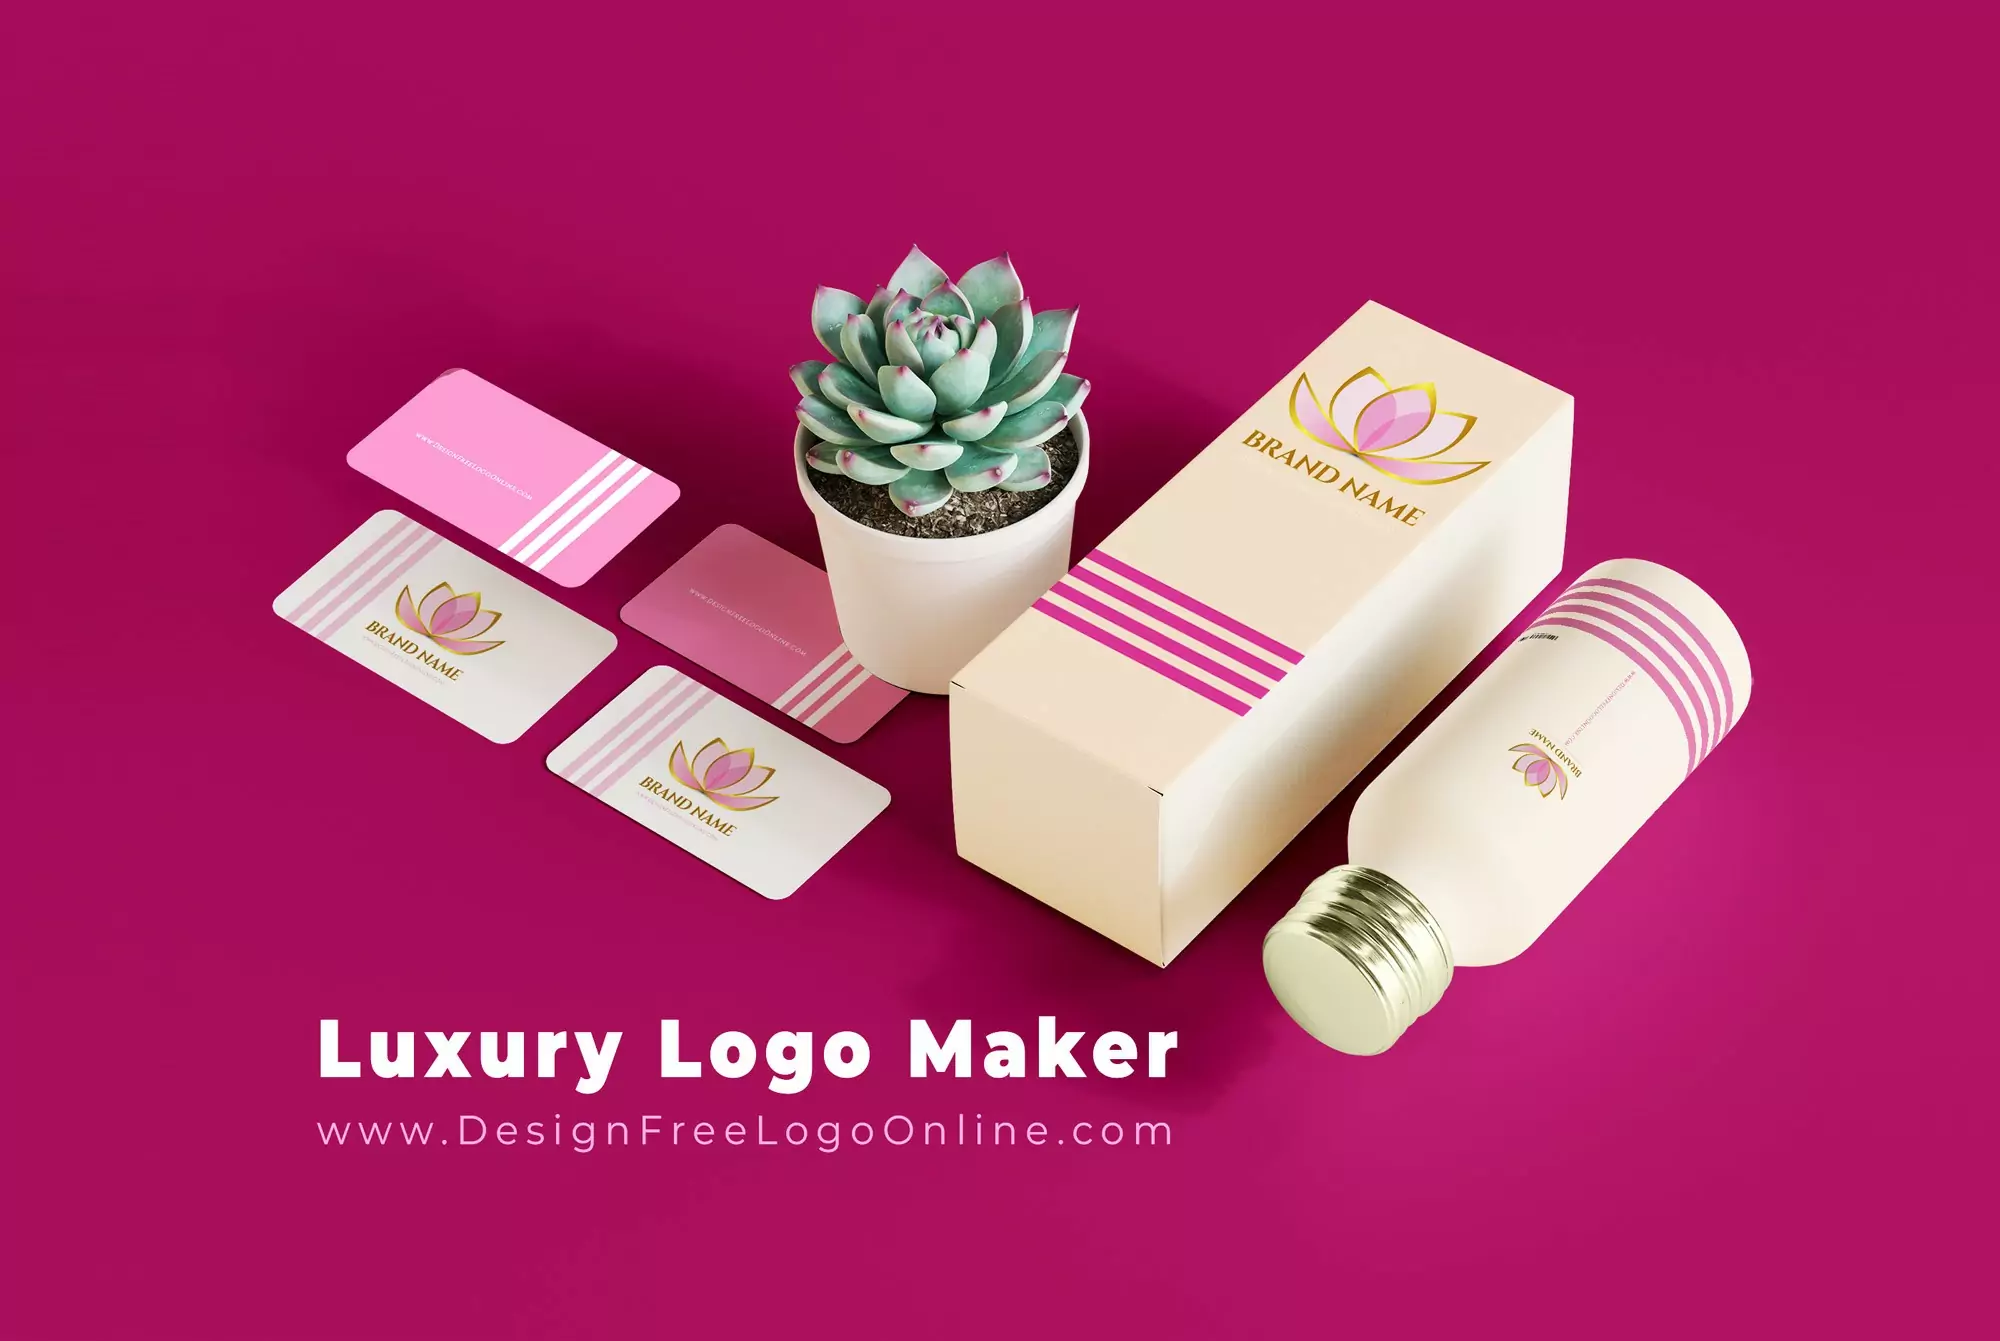 Création gratuite de logos de luxe